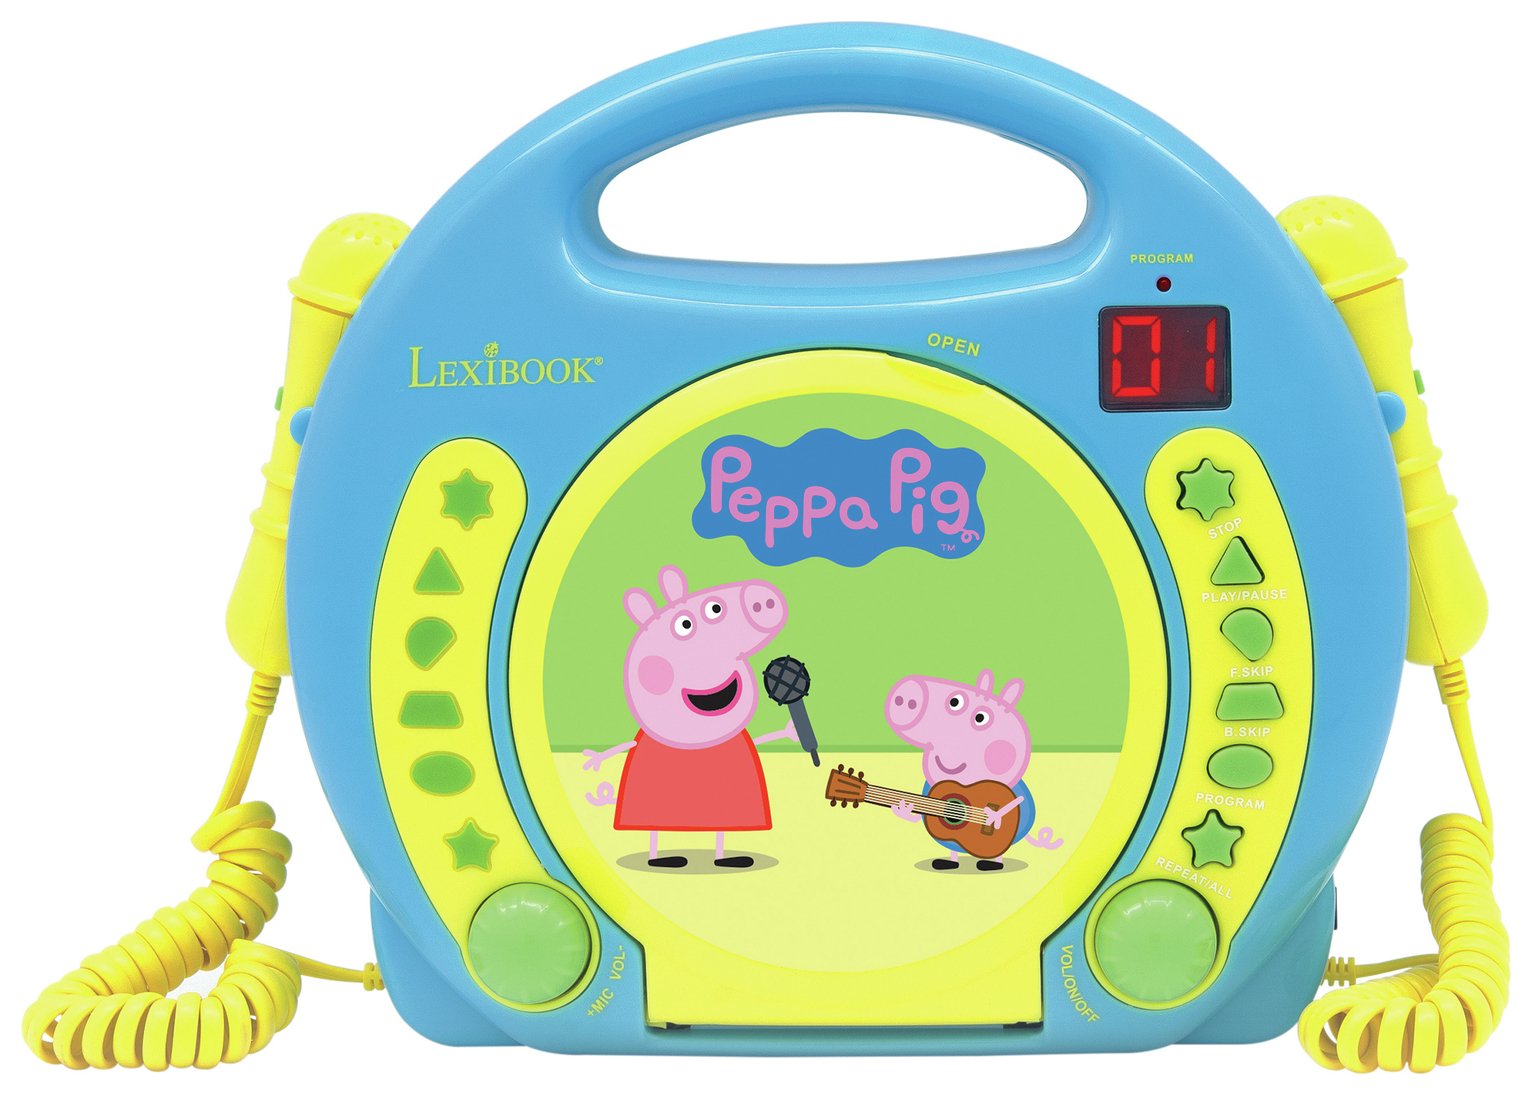 Peppa Pig Karaoke CD Player. Review